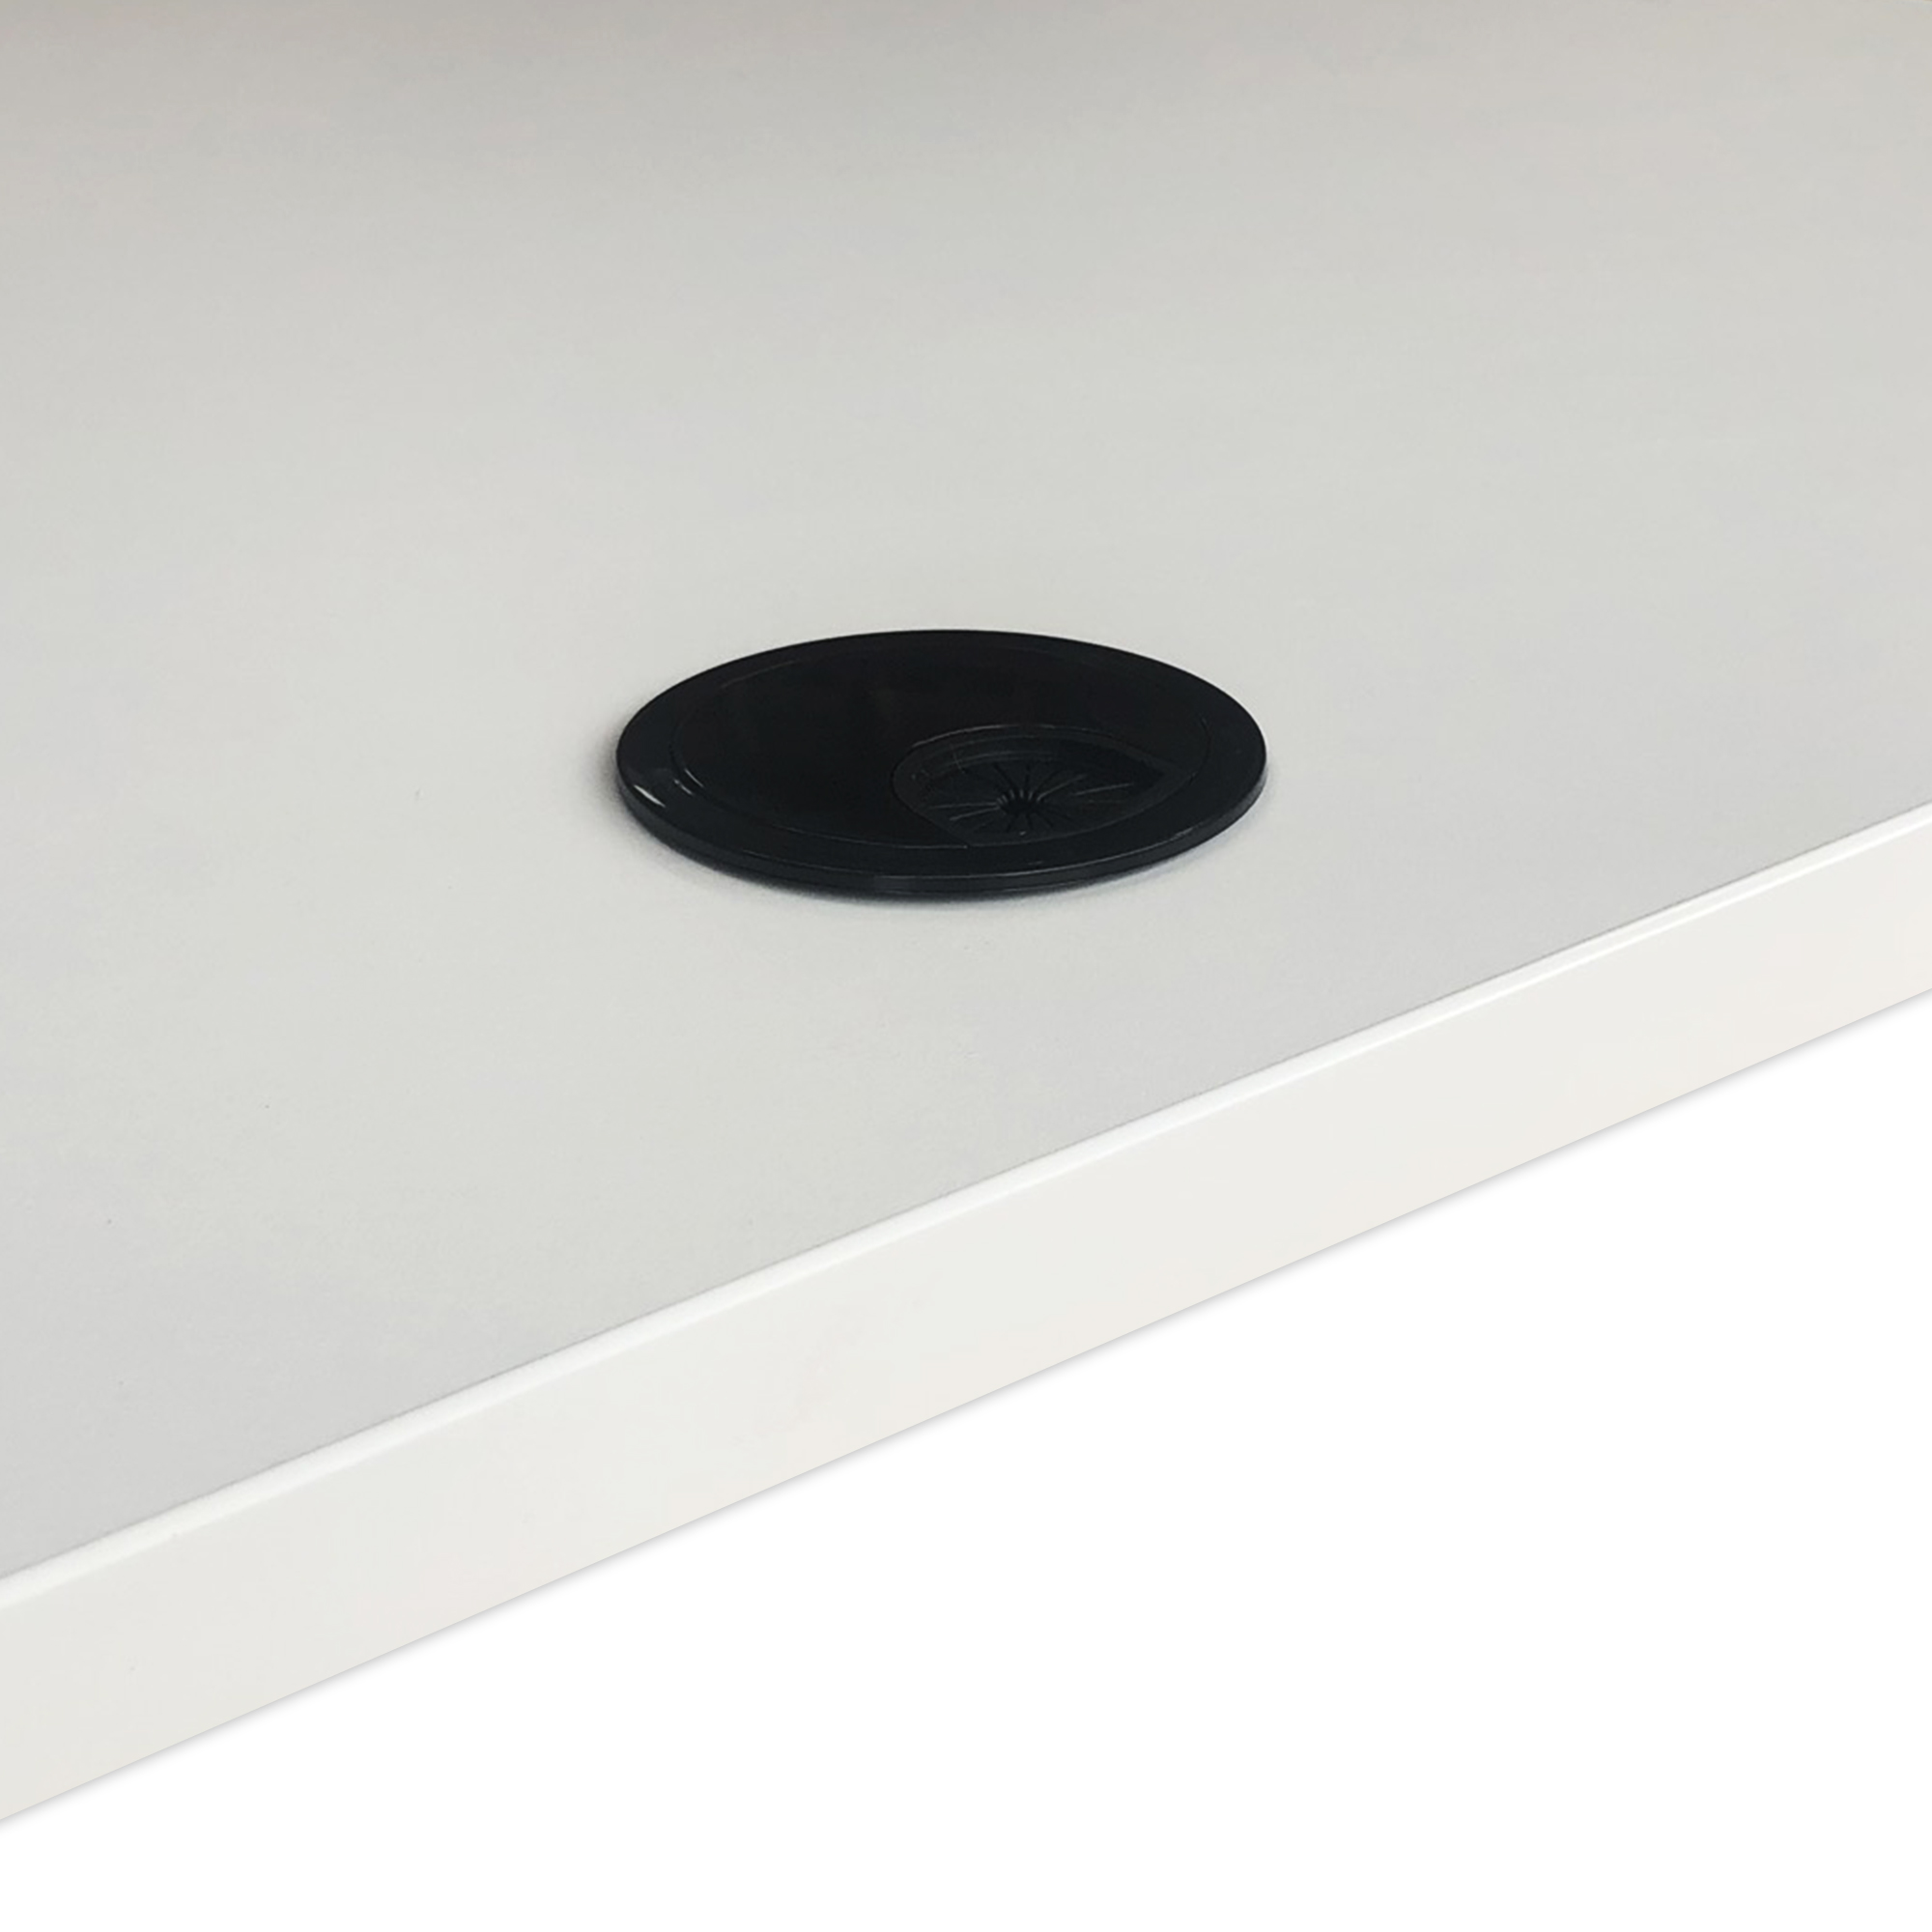 Tabletop | 140x80 cm | White